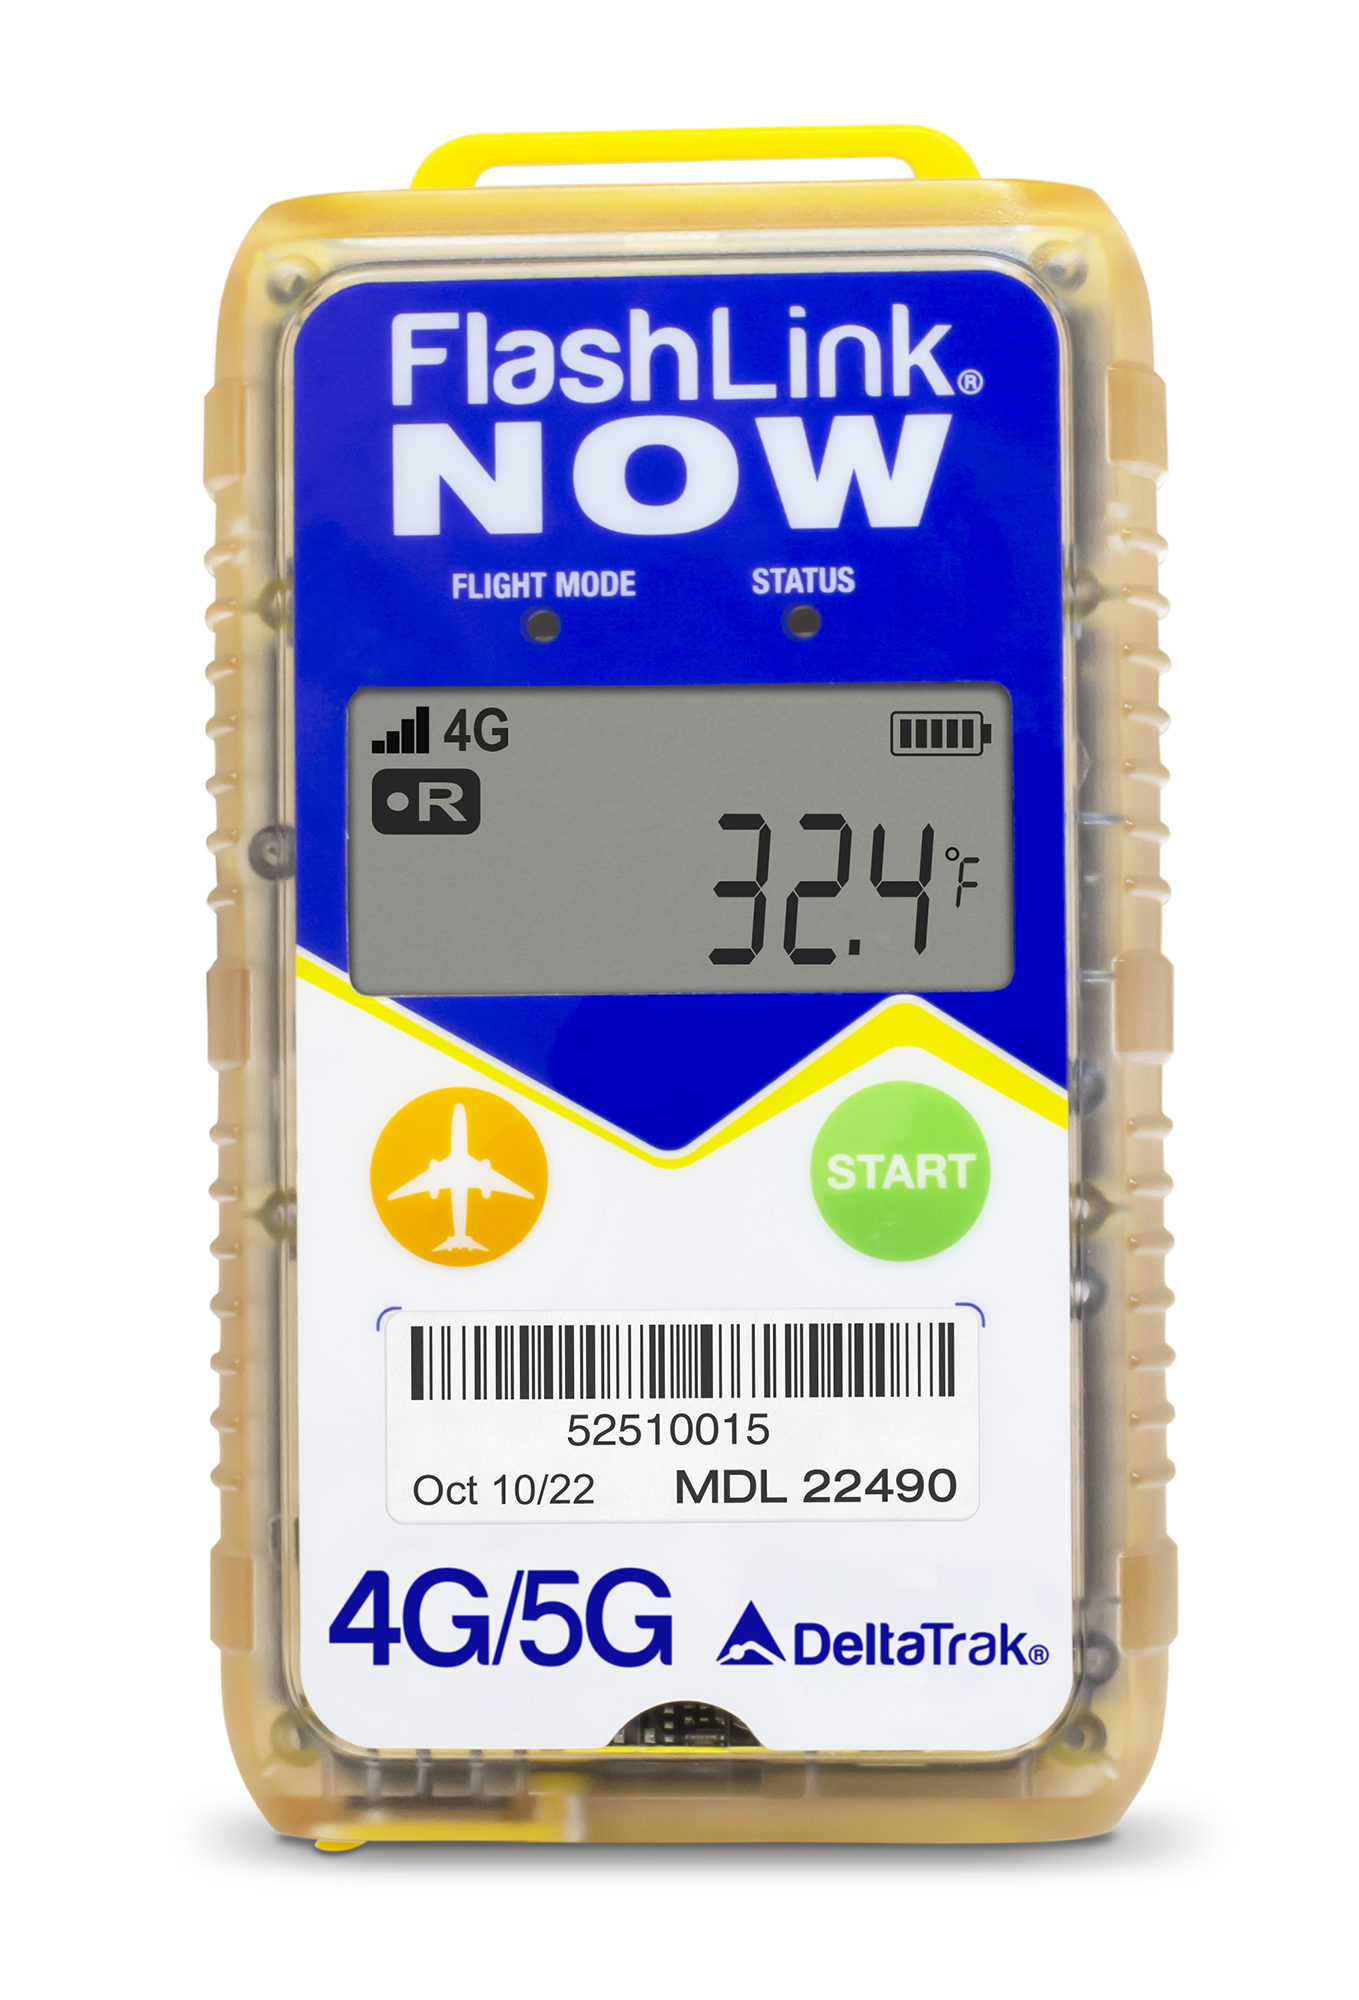 FlashLink® NOW 4G/5G Real-Time In-Transit Logger, Model 22490